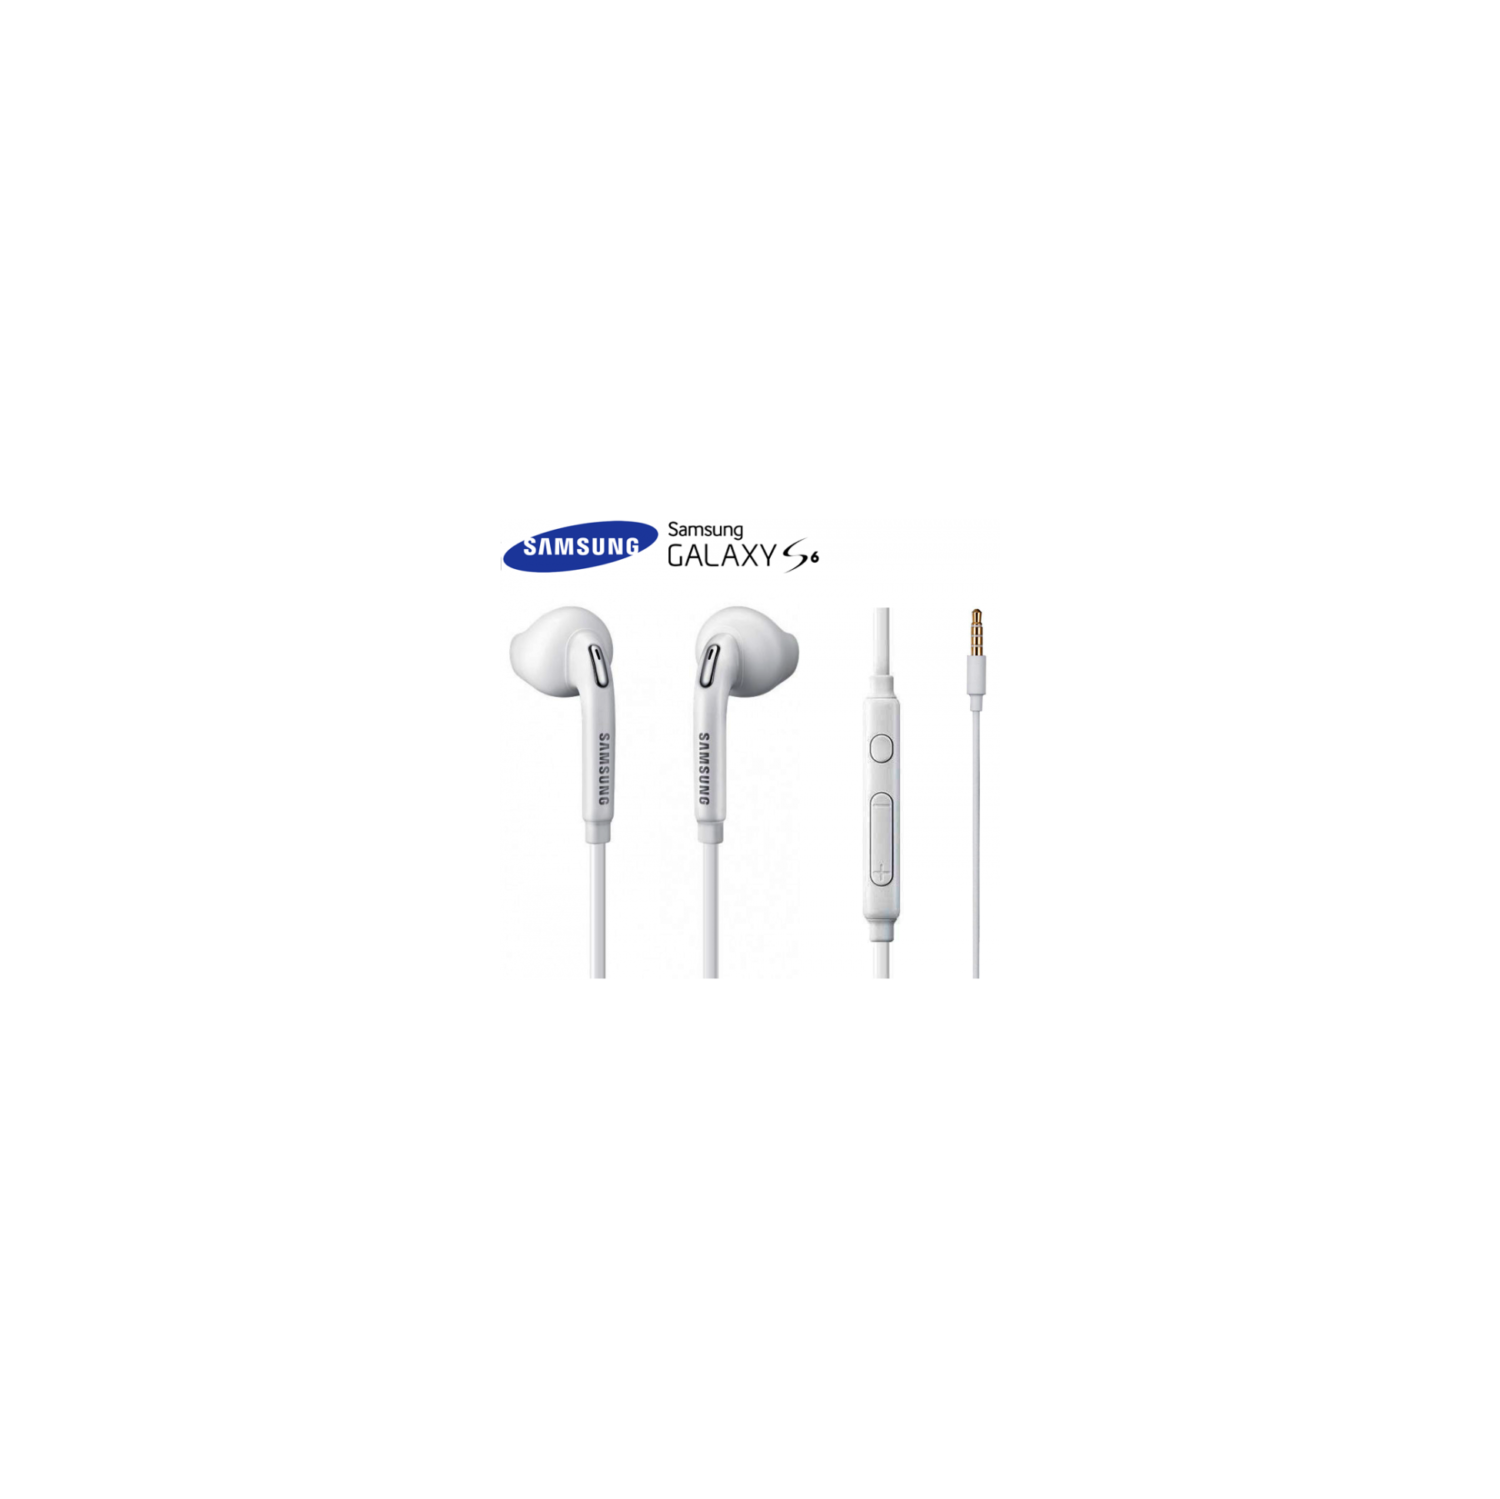 Samsung galaxy headphone headset for Samsung galaxy S7 S6 S5 S4 NOTE 5 6 7 8 9 S9 S6 EDGE 3.5 mm White EO-EG920BW